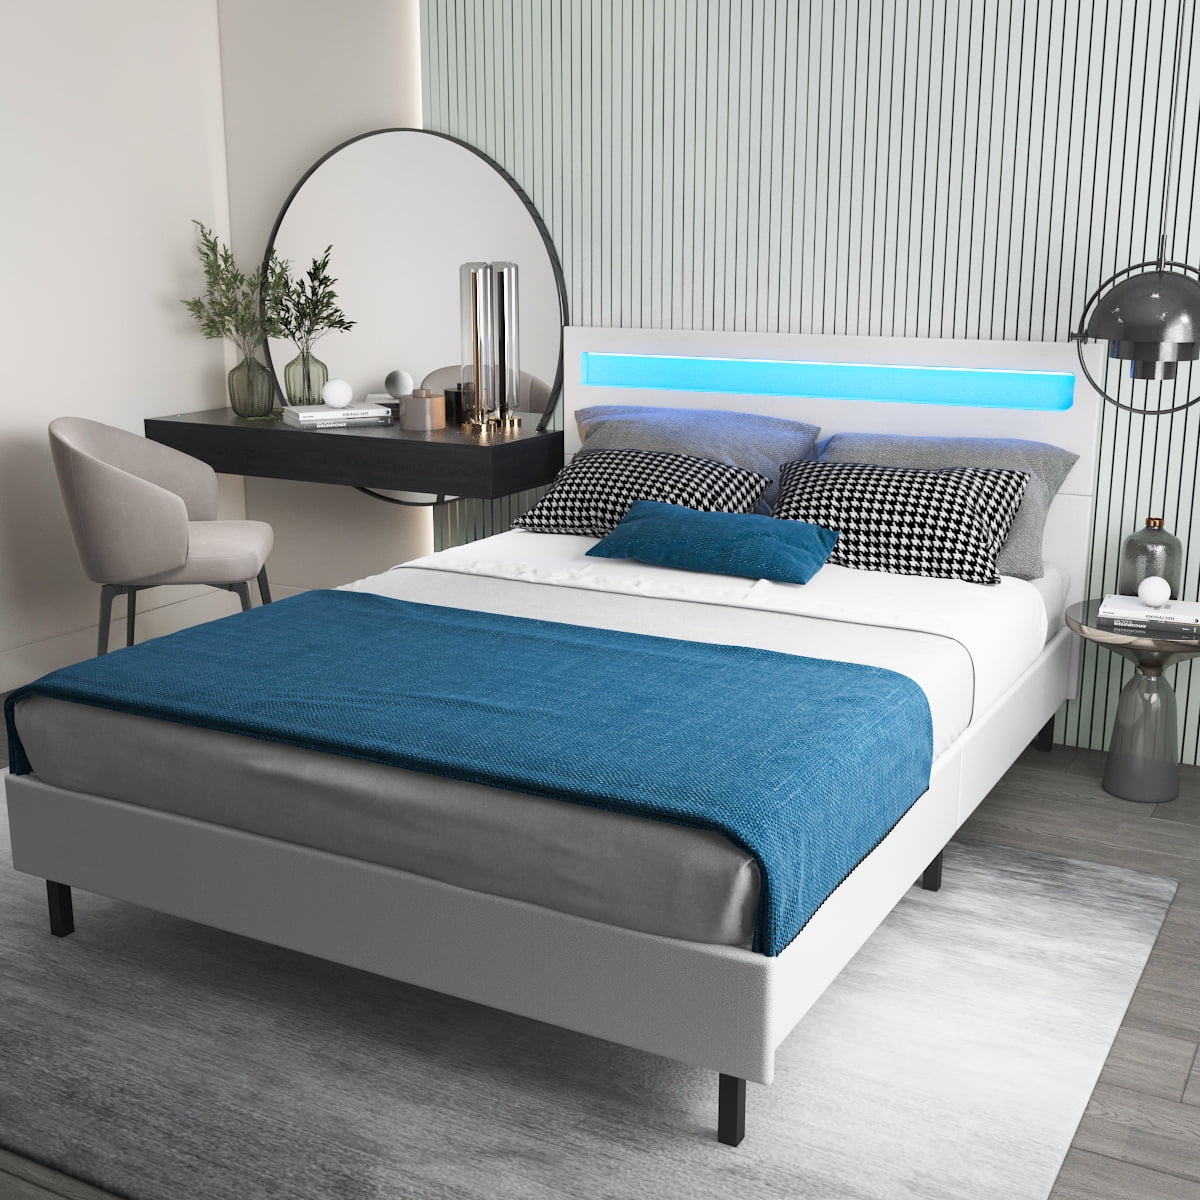 LXingStore Queen Size Bed Frame Bedroom Platform w/ LED Light Headboard